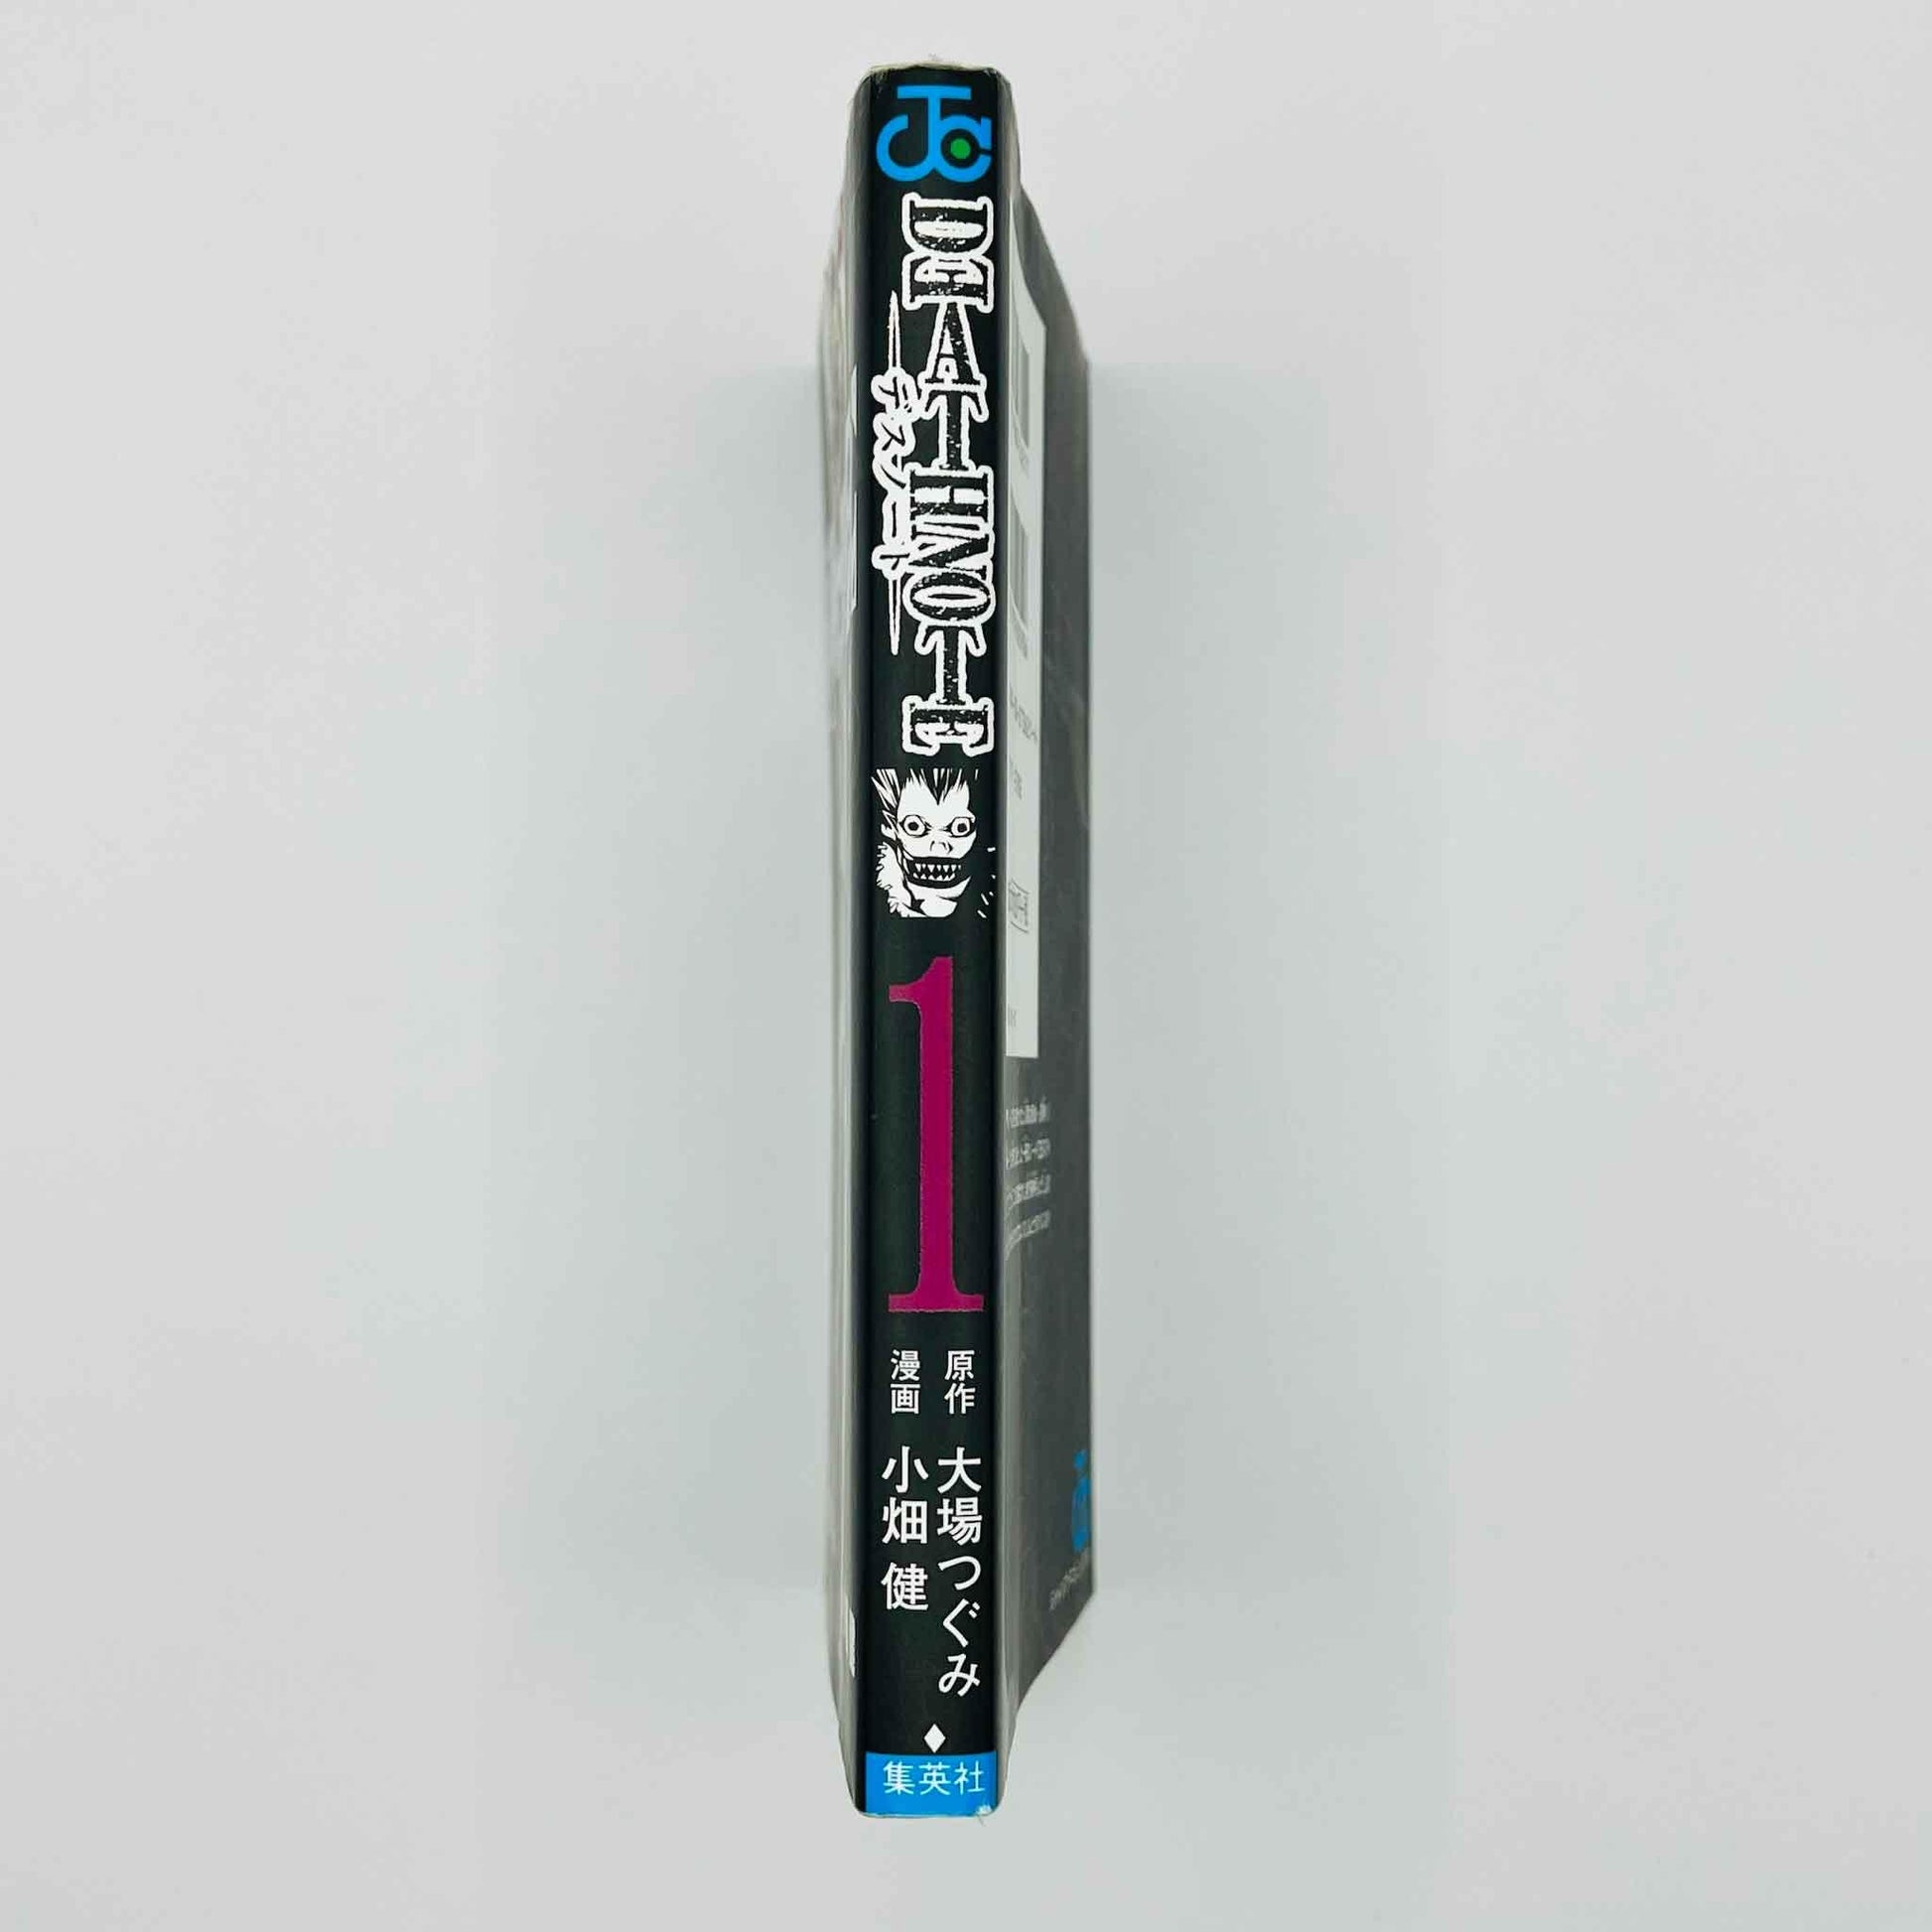 Death Note - Volume 01 - 1stPrint.net - 1st First Print Edition Manga Store - M-DN-01-001